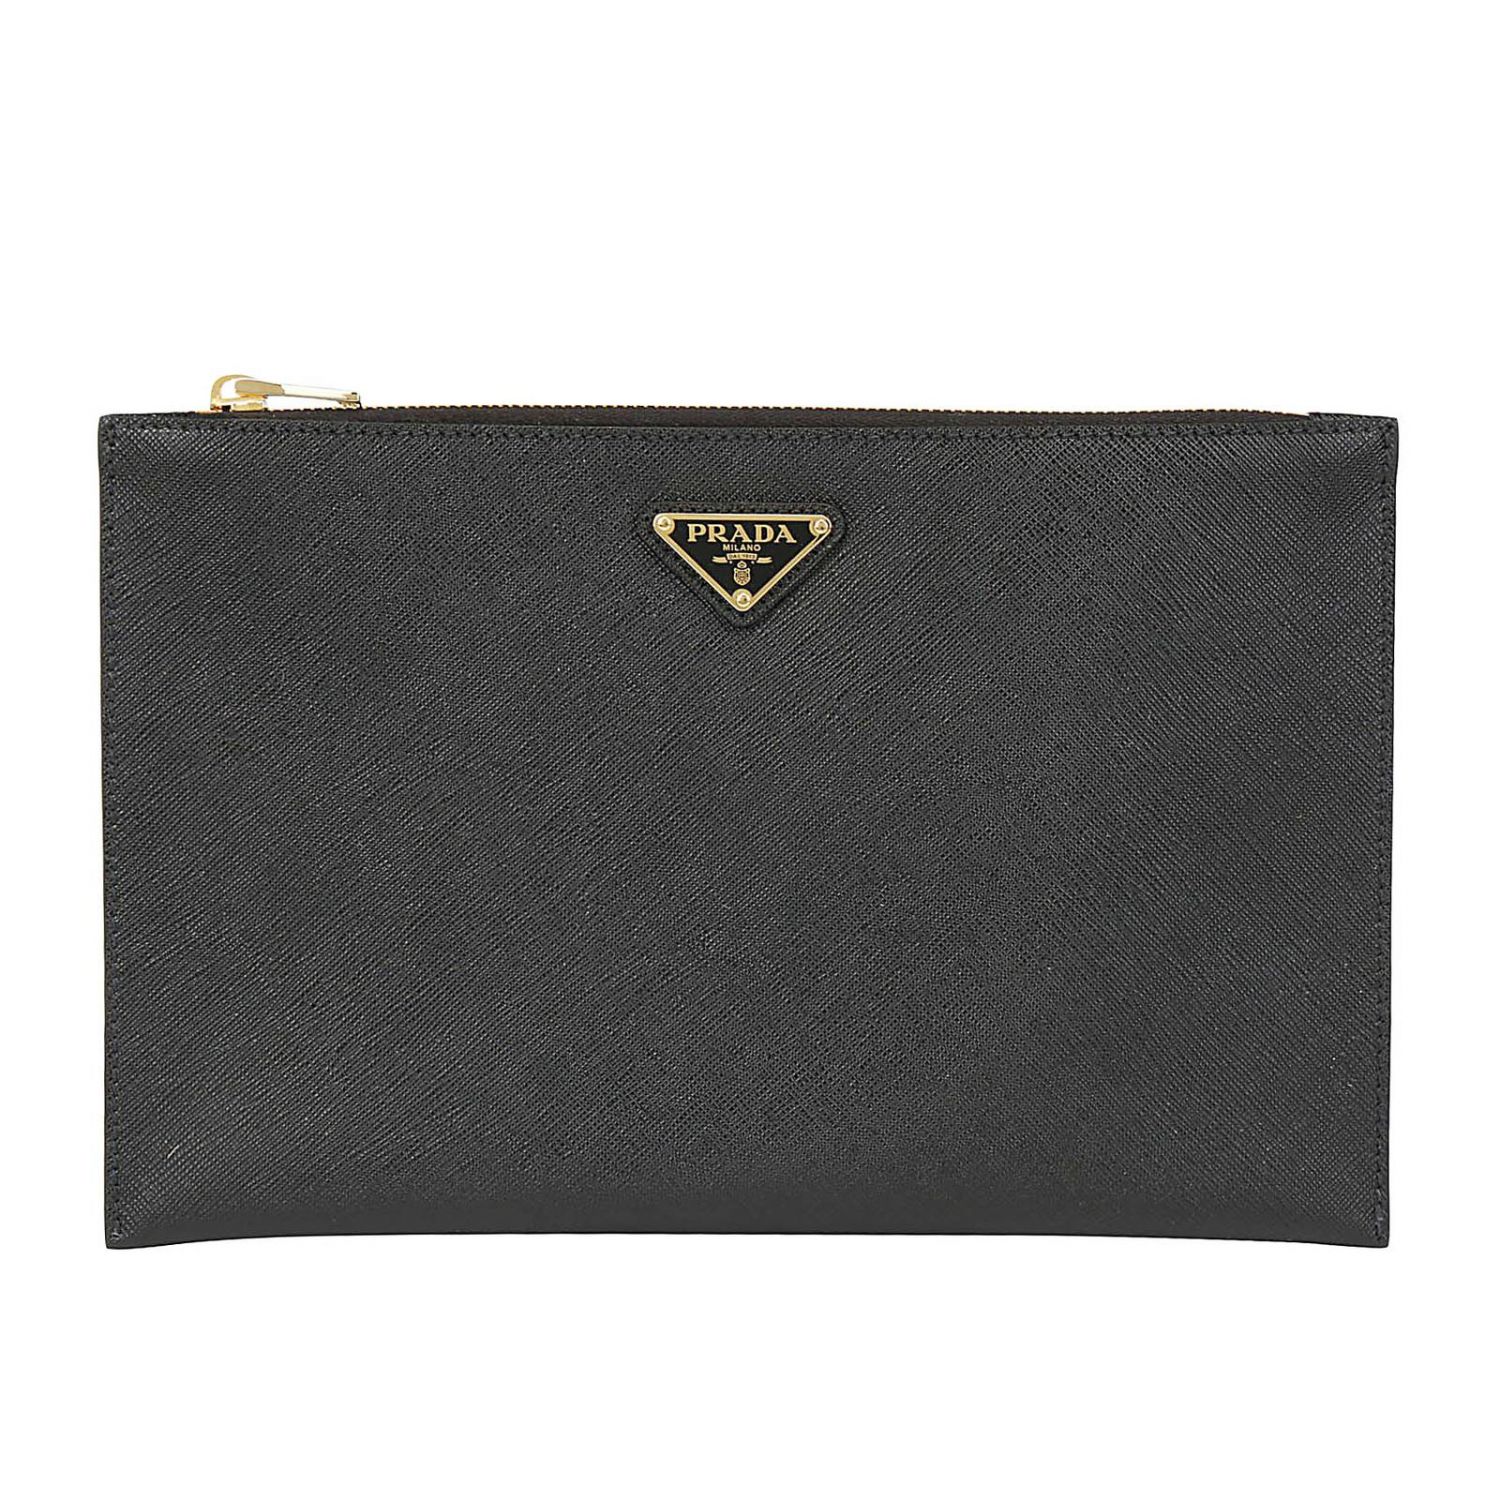 PRADA: leather clutch bag with triangular logo - Black | Wallet Prada ...